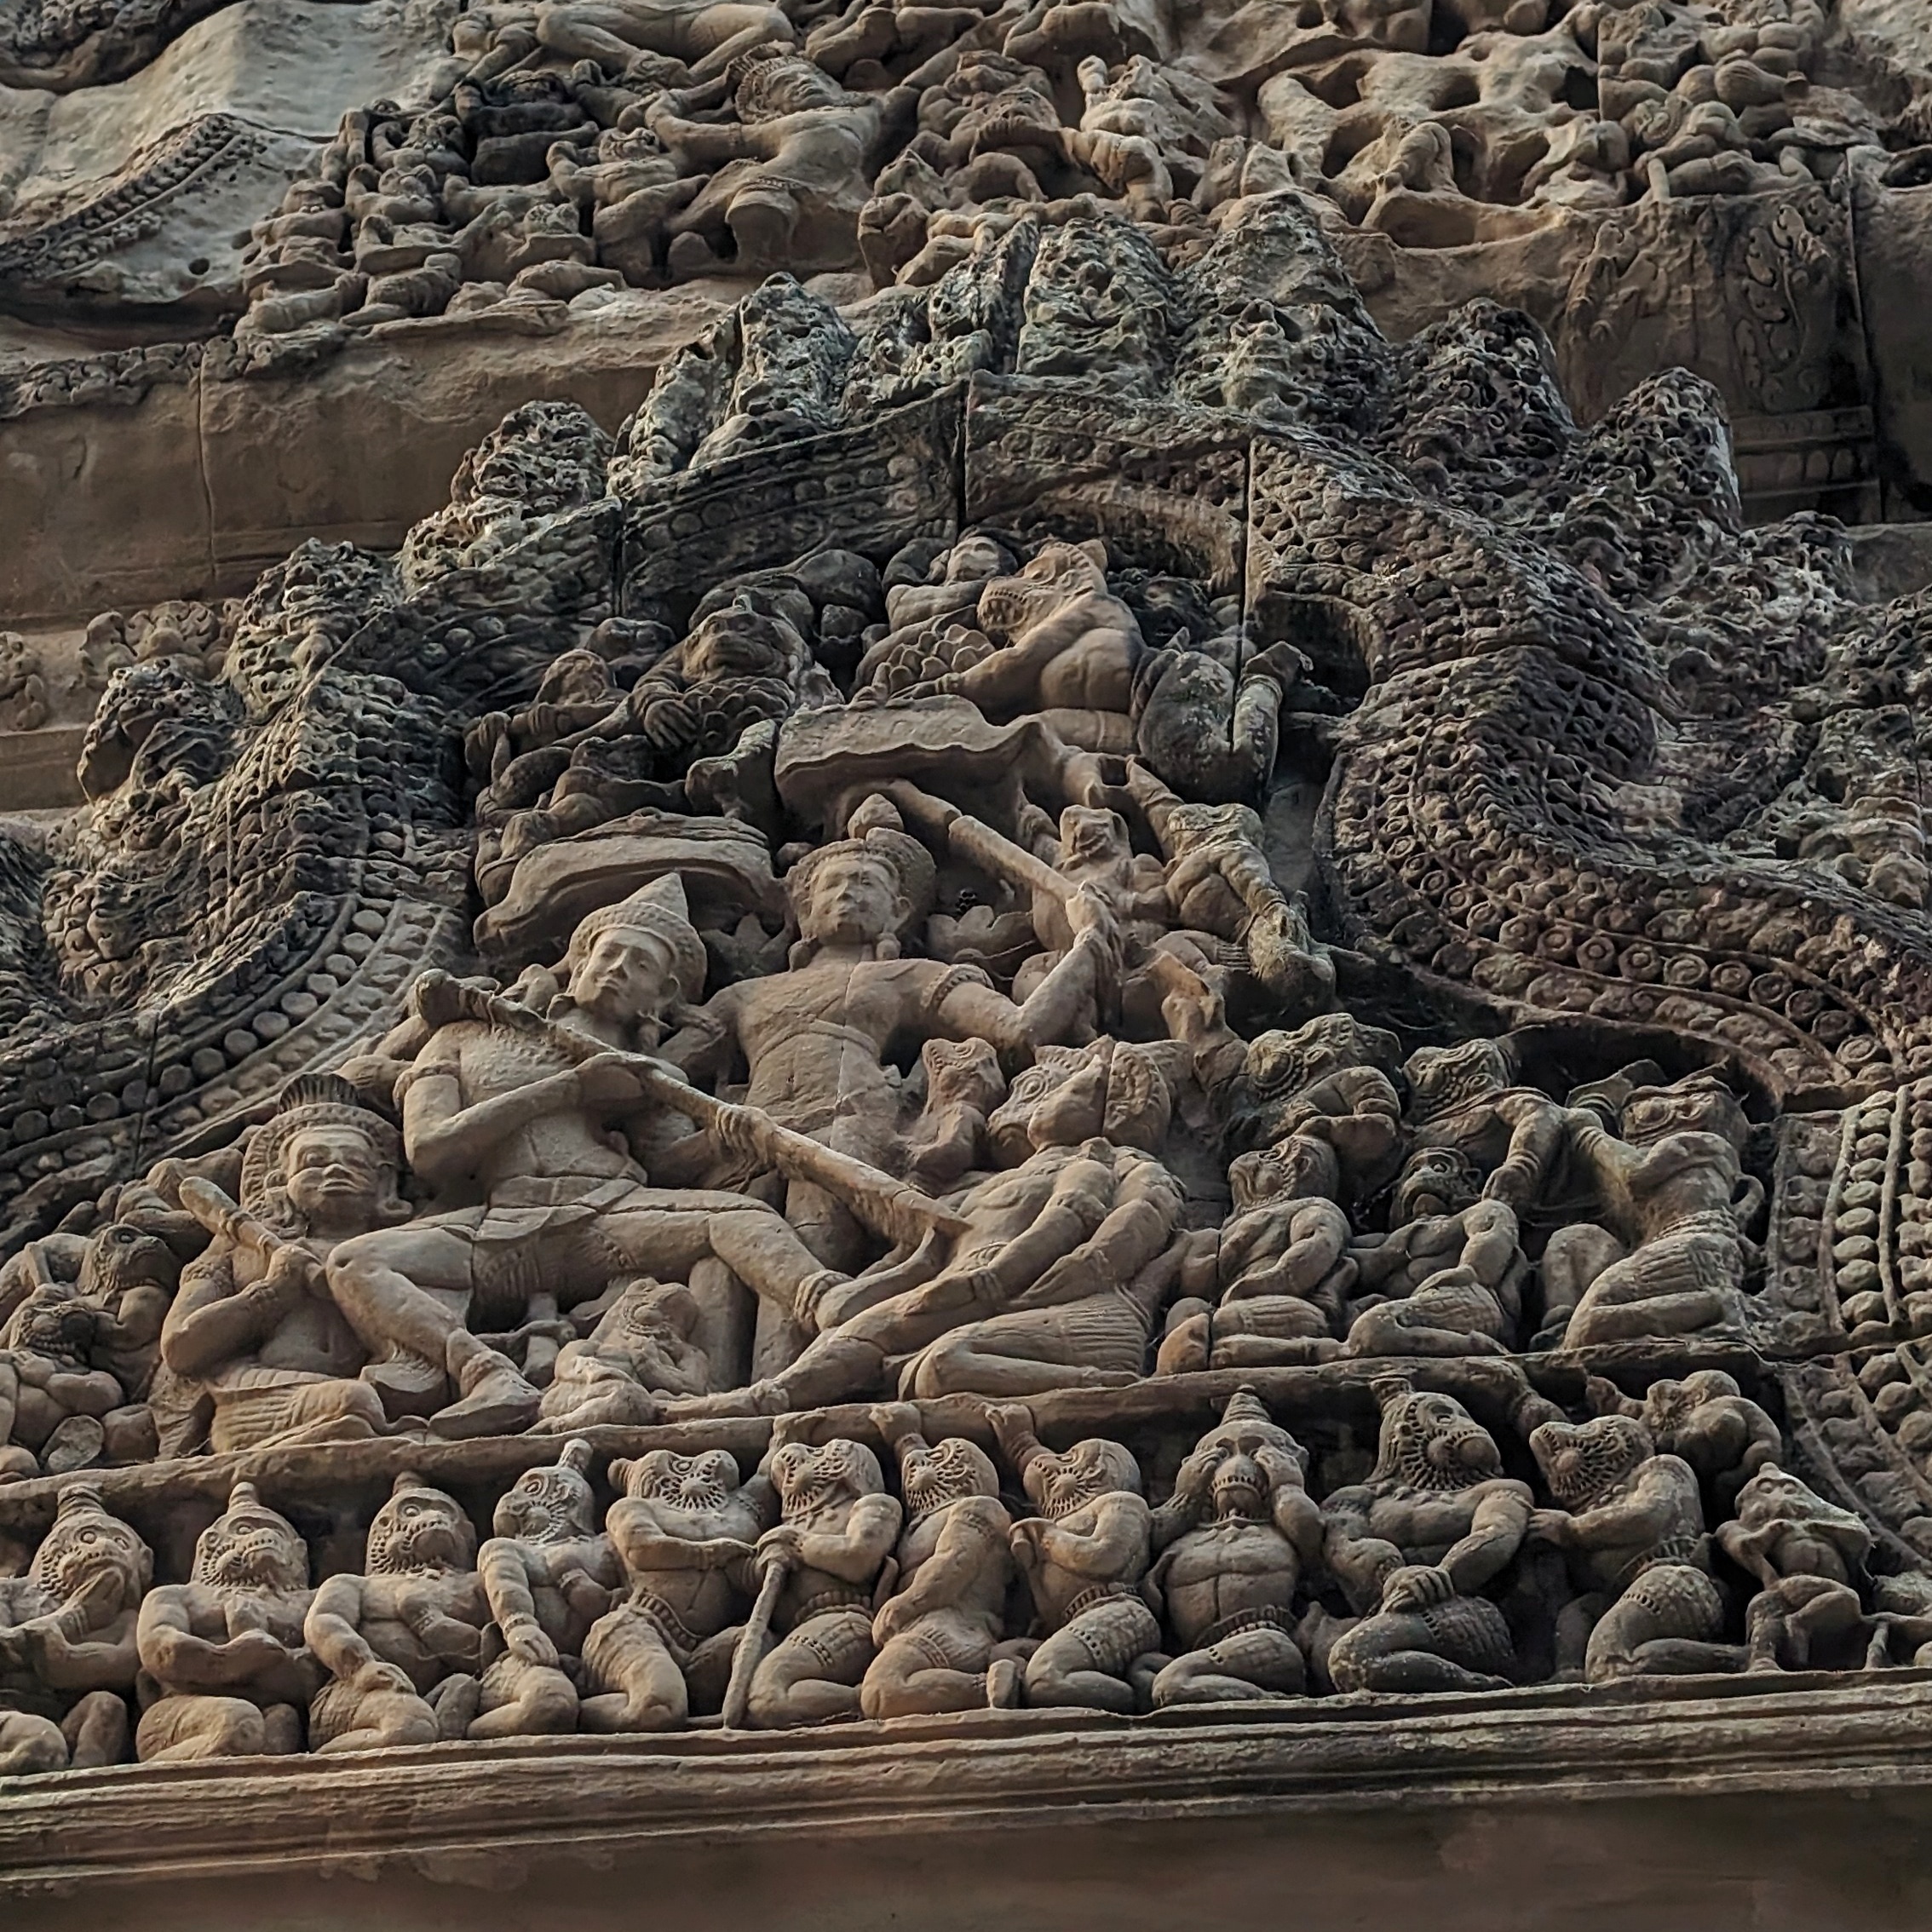 Park Hyatt Siem Reap Angkor Wat Sunrise Tour